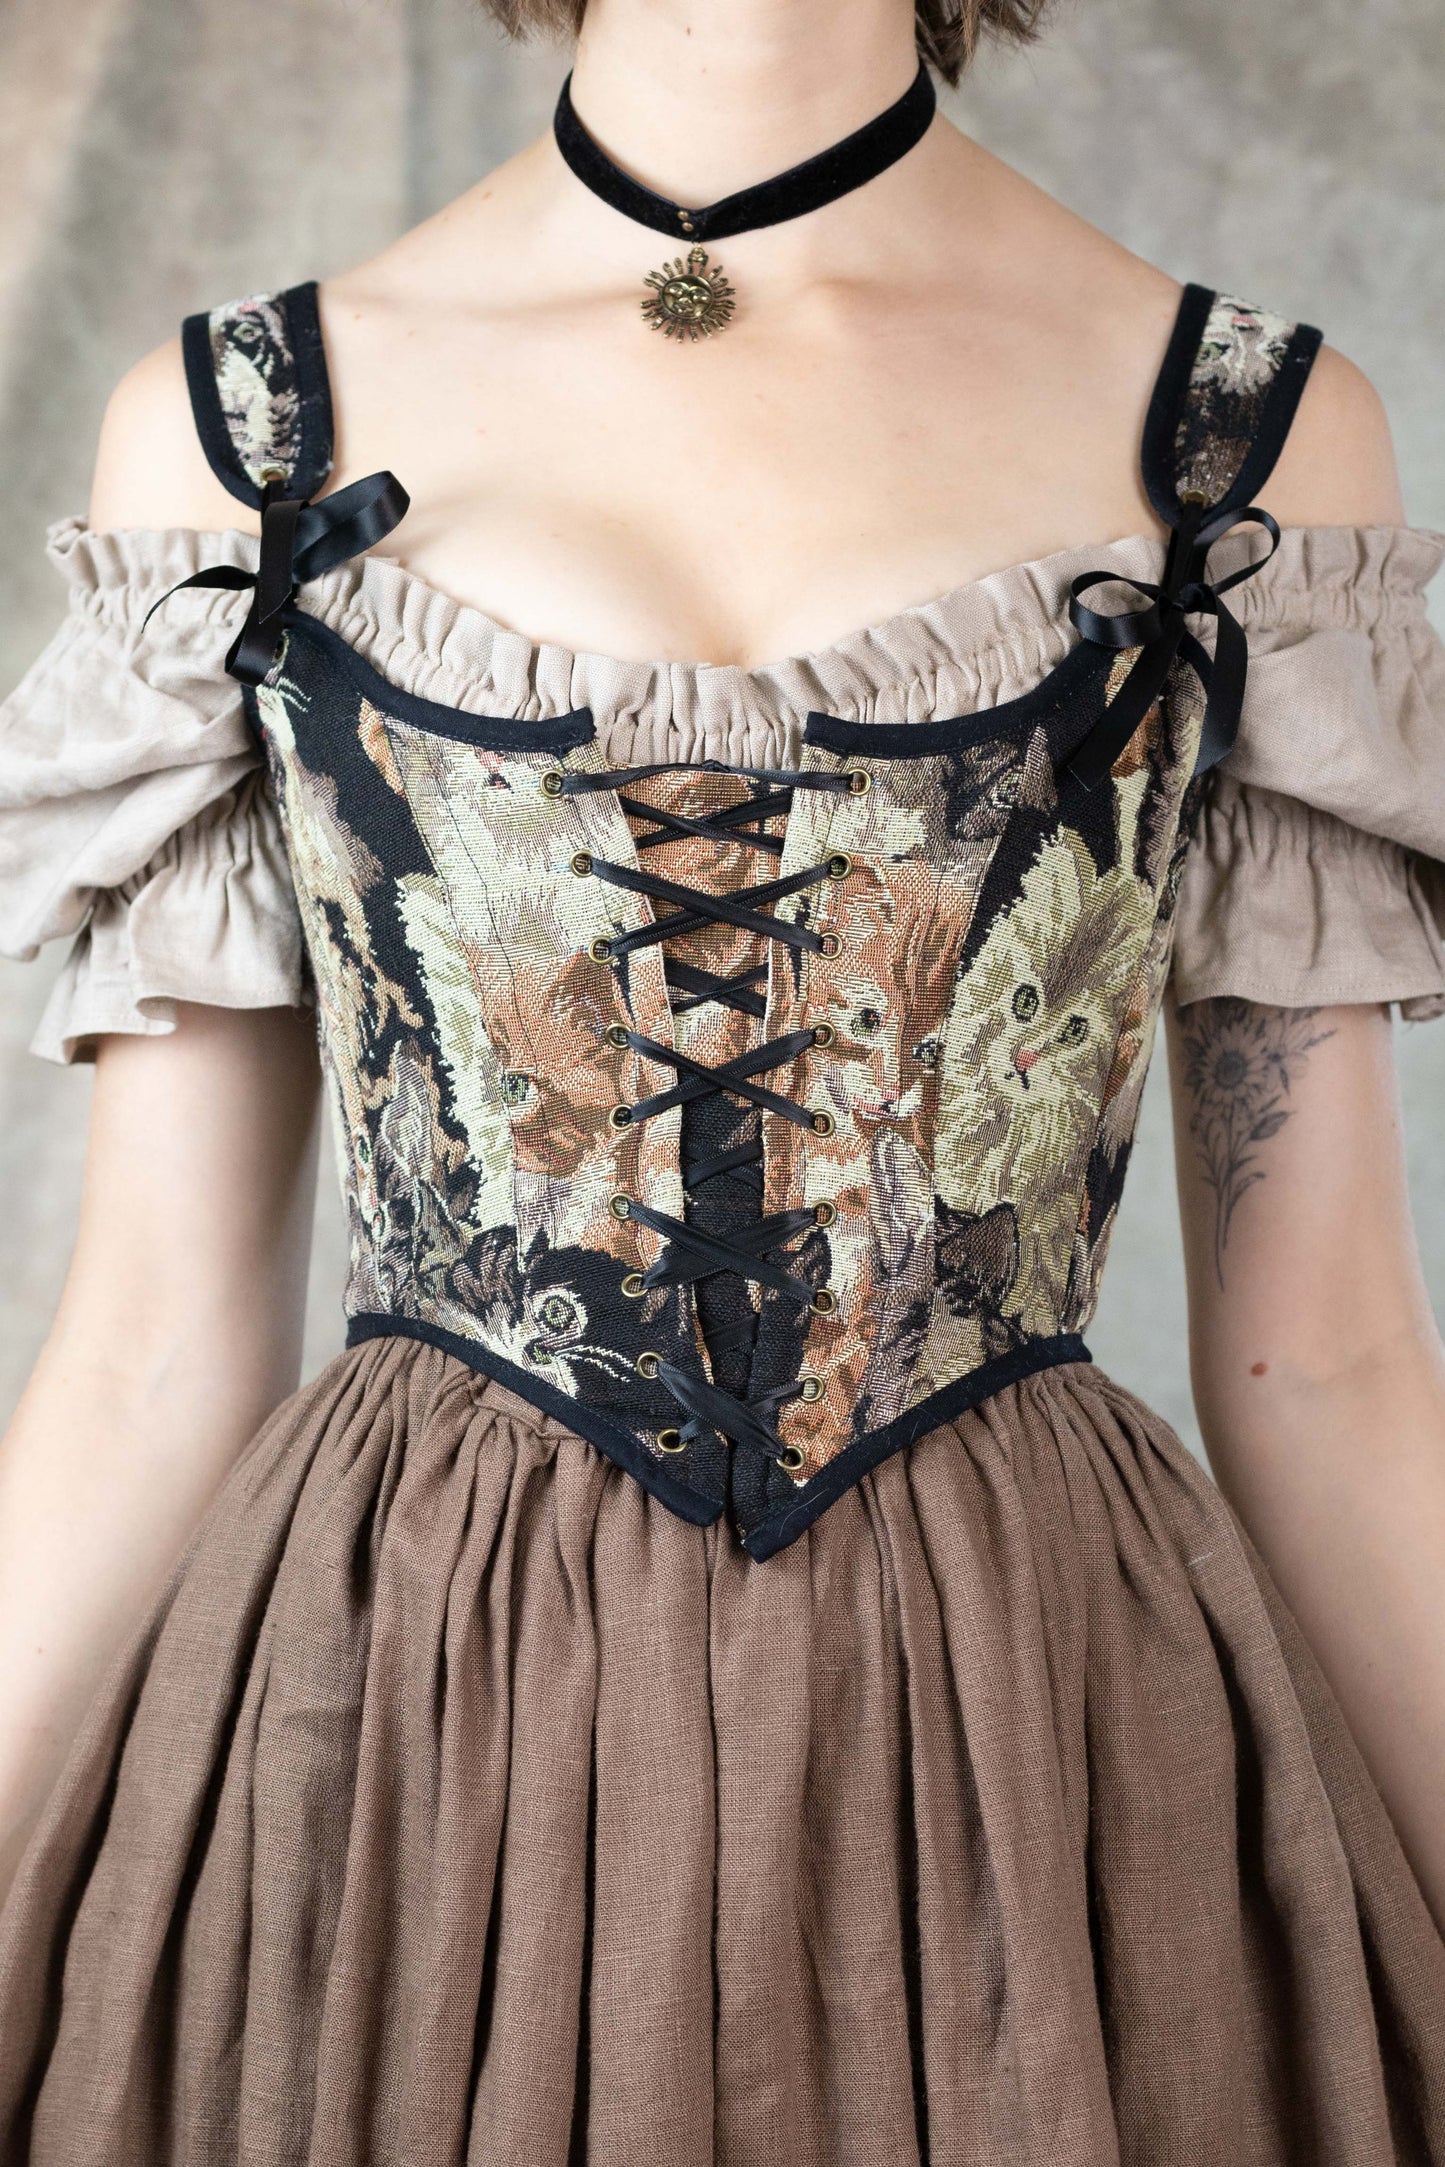 French corset basque - Gem